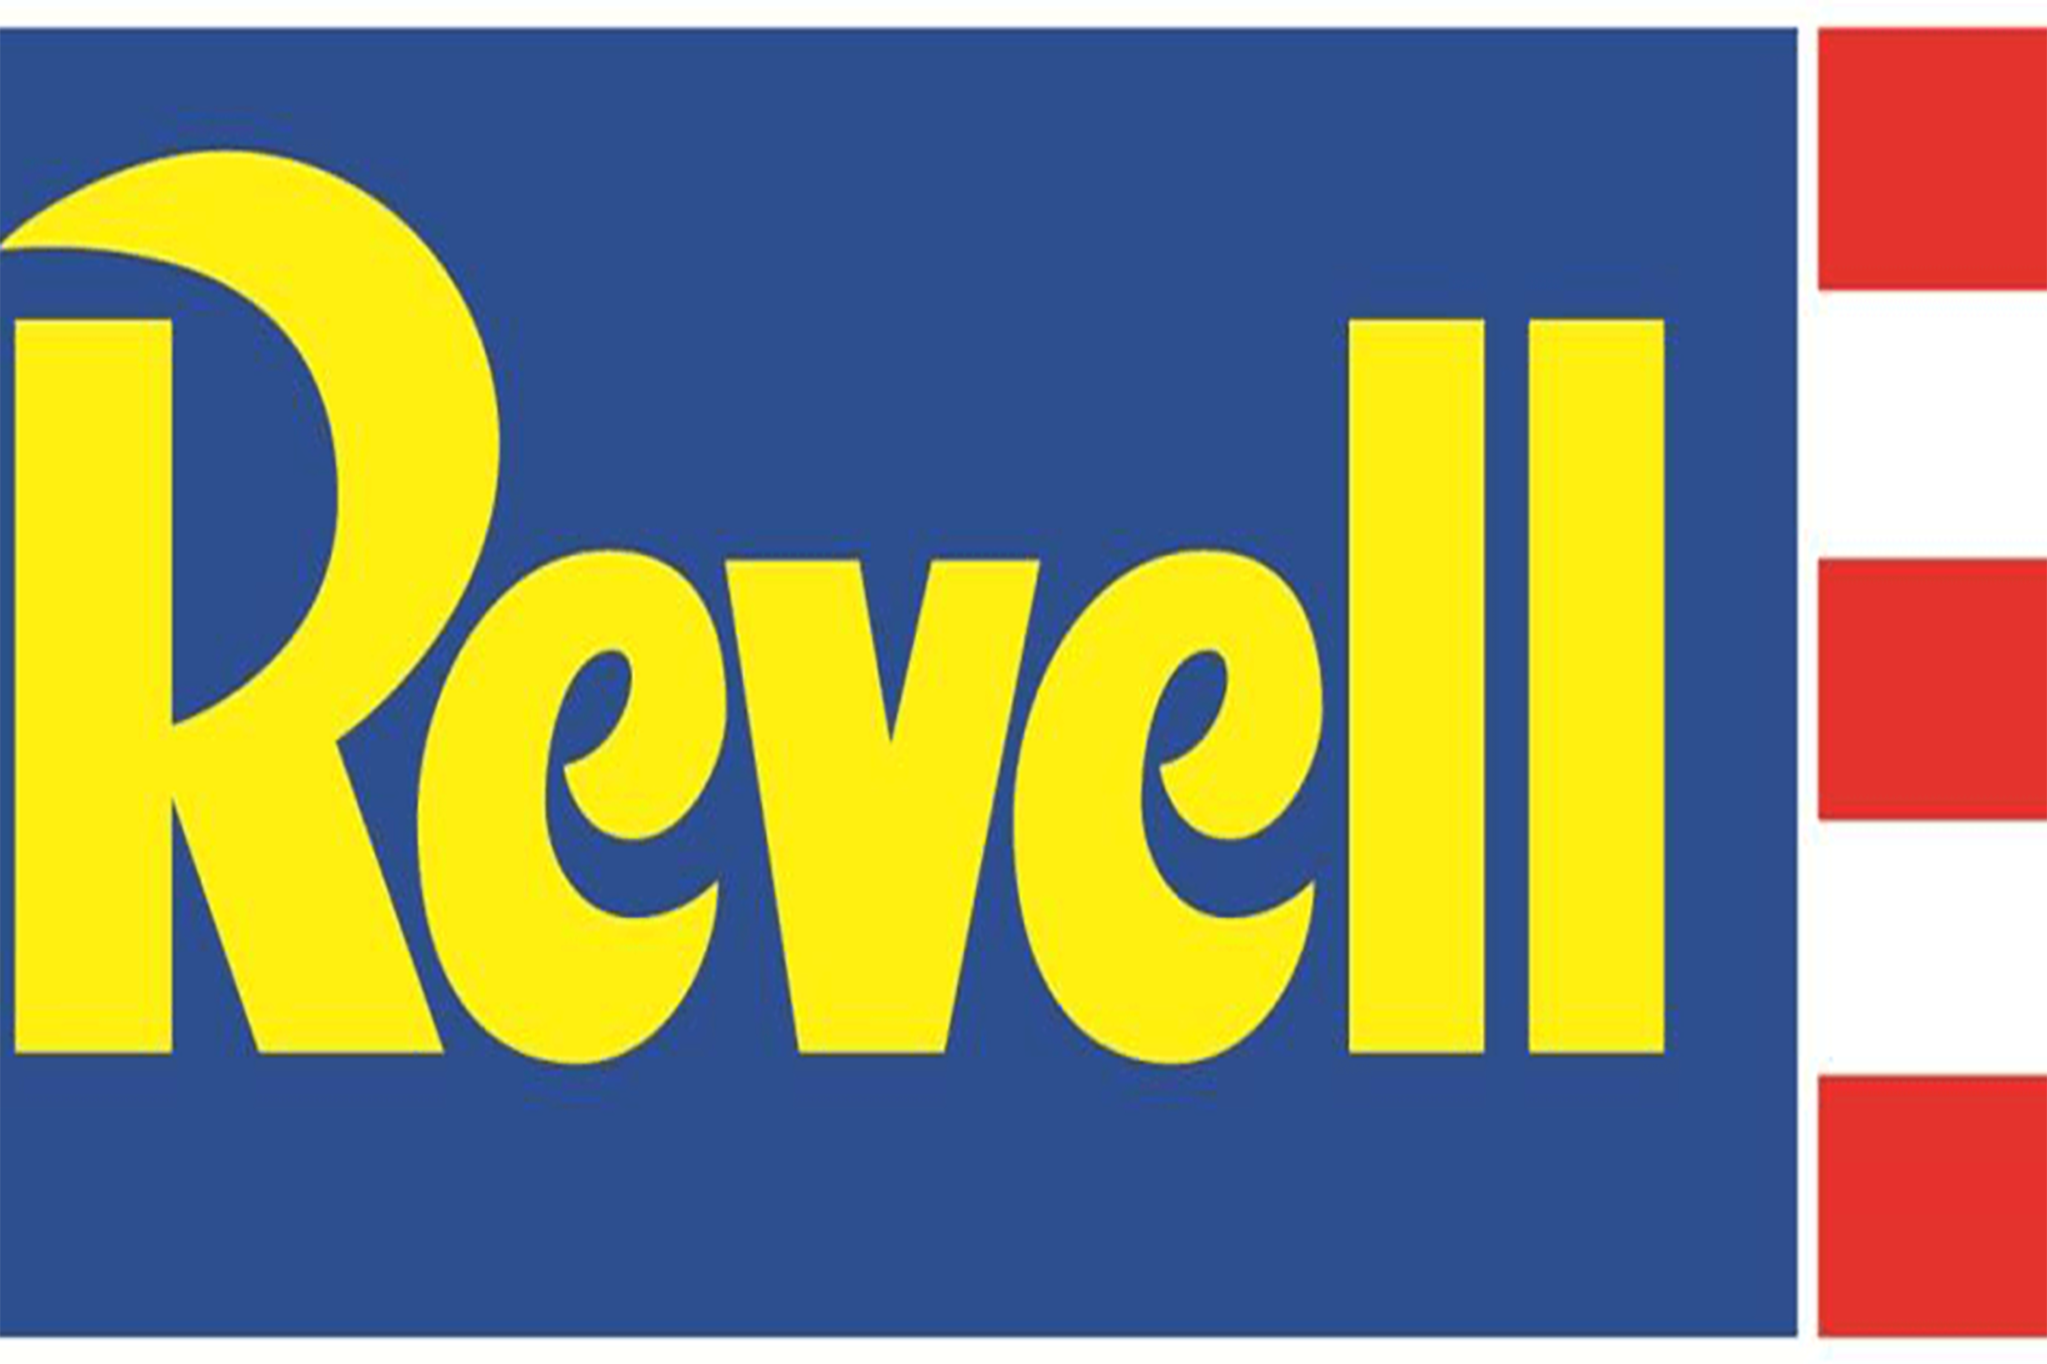 Revell verf voor modelbouw: acrylverf of enamel verf? Dit moet je weten! -  Modelbouwverf - Modelbouwverf.nl